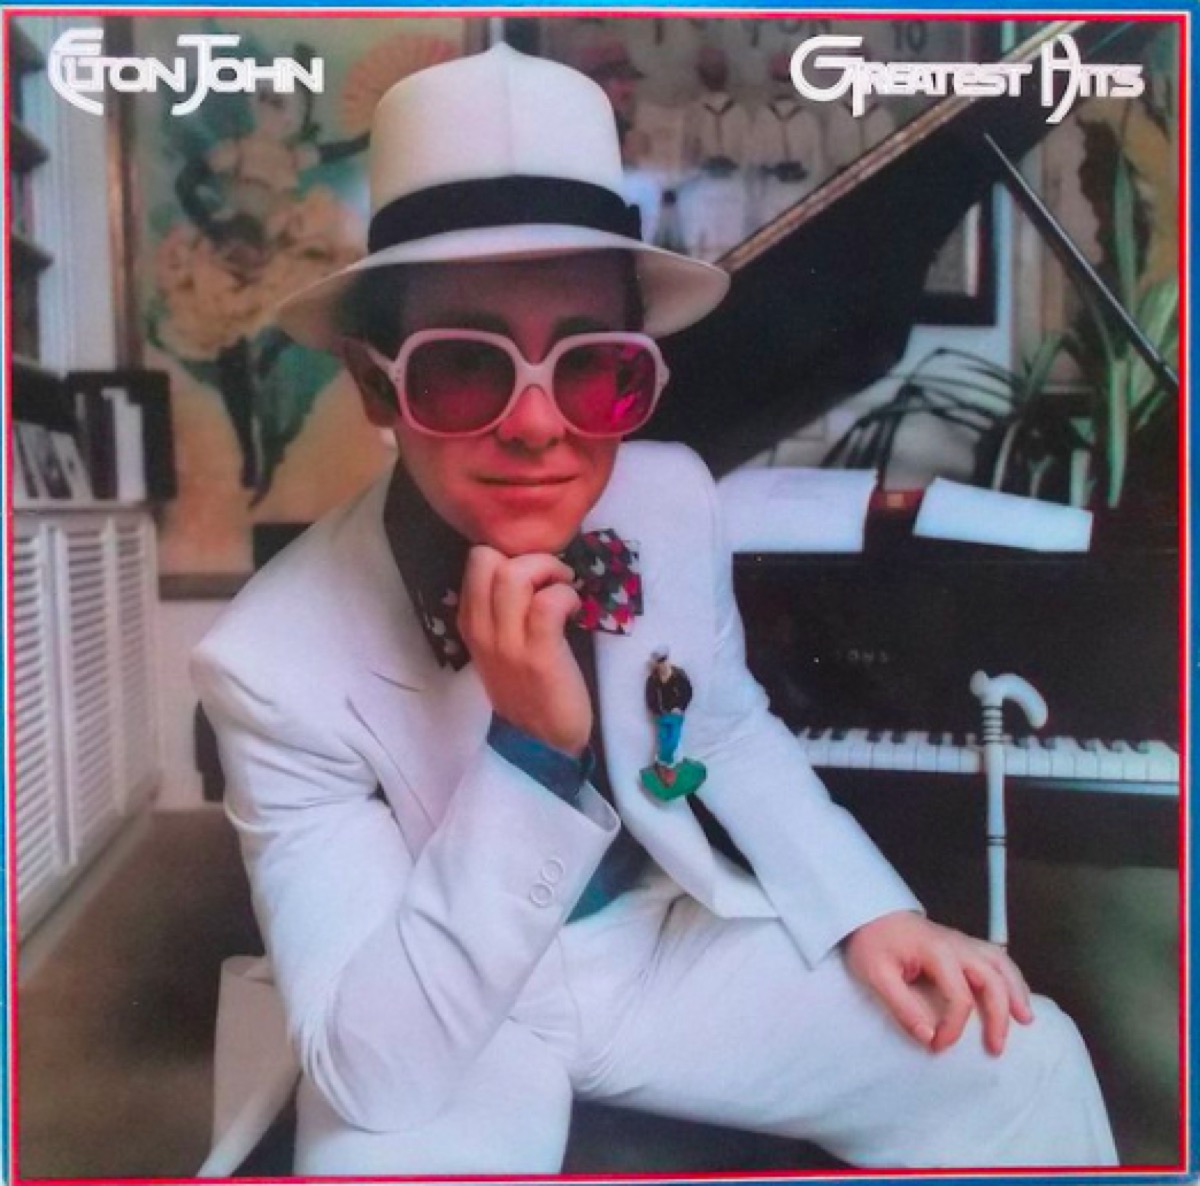 Elton John Greatest Hits album